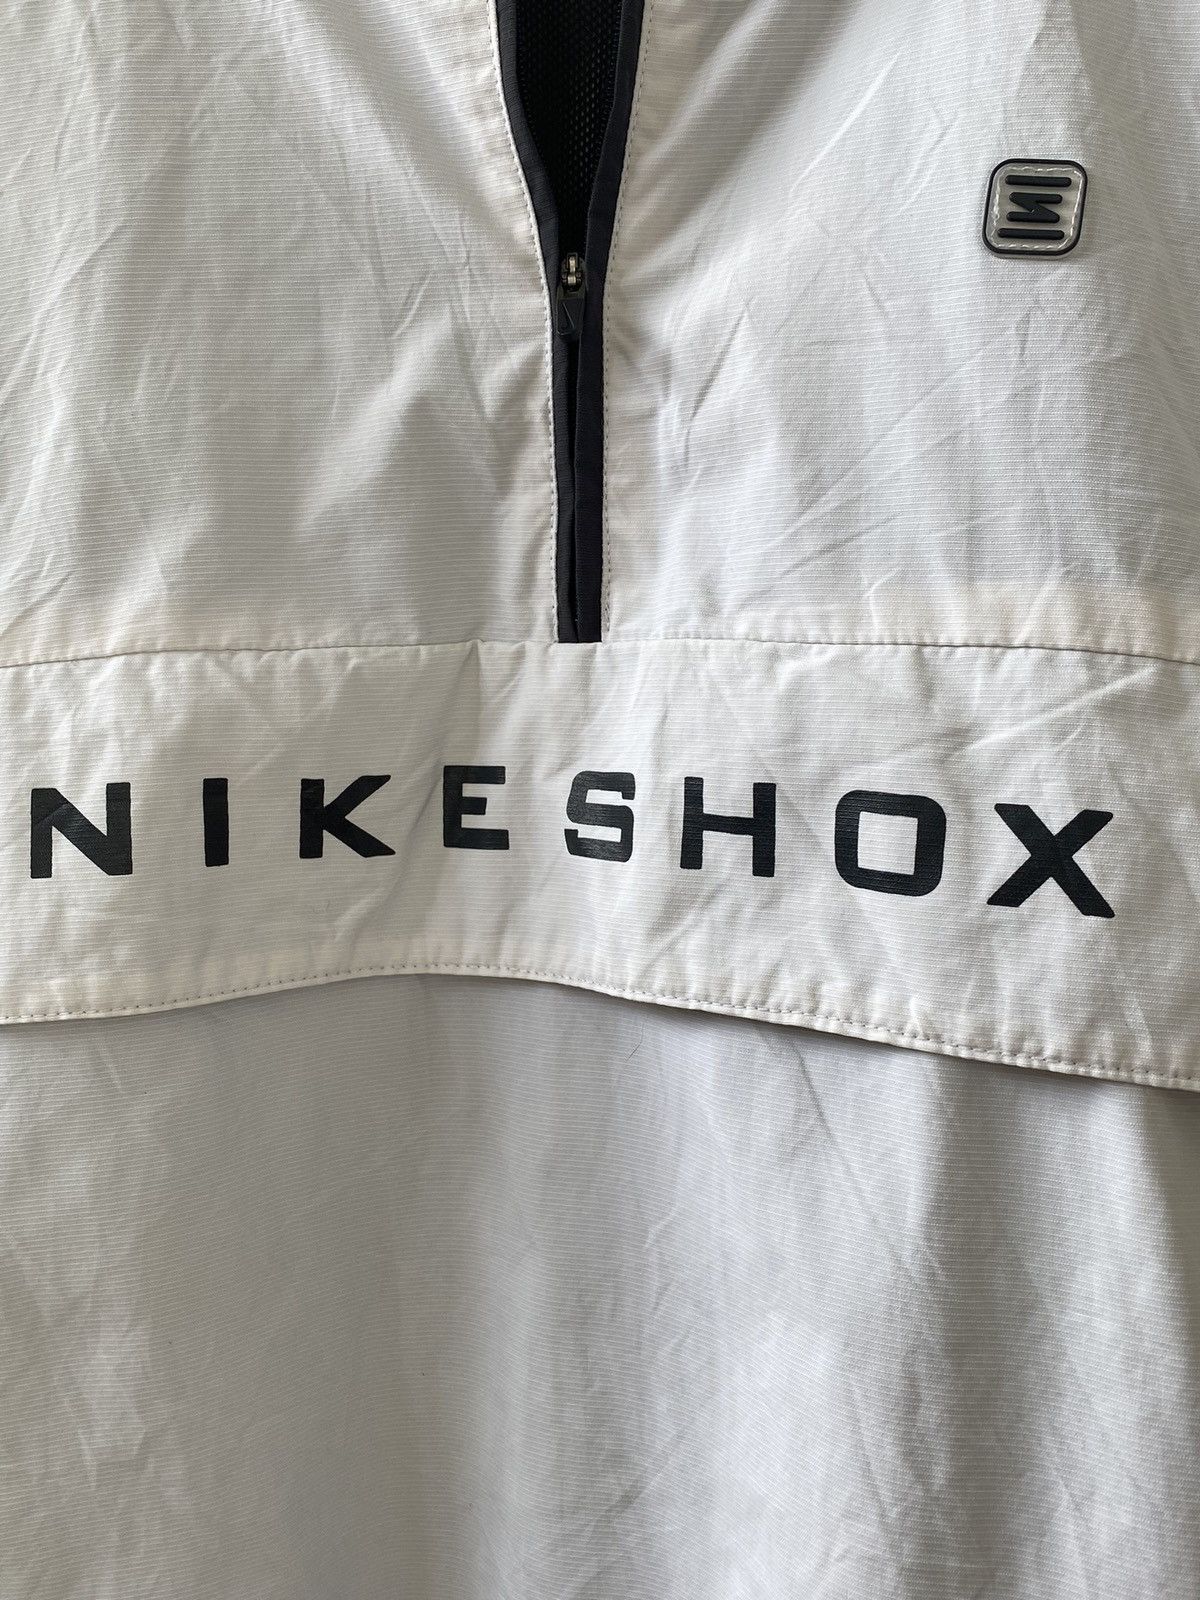 Nike Vintage Nike Shox Anorak Jacket Size US XL / EU 56 / 4 - 6 Thumbnail